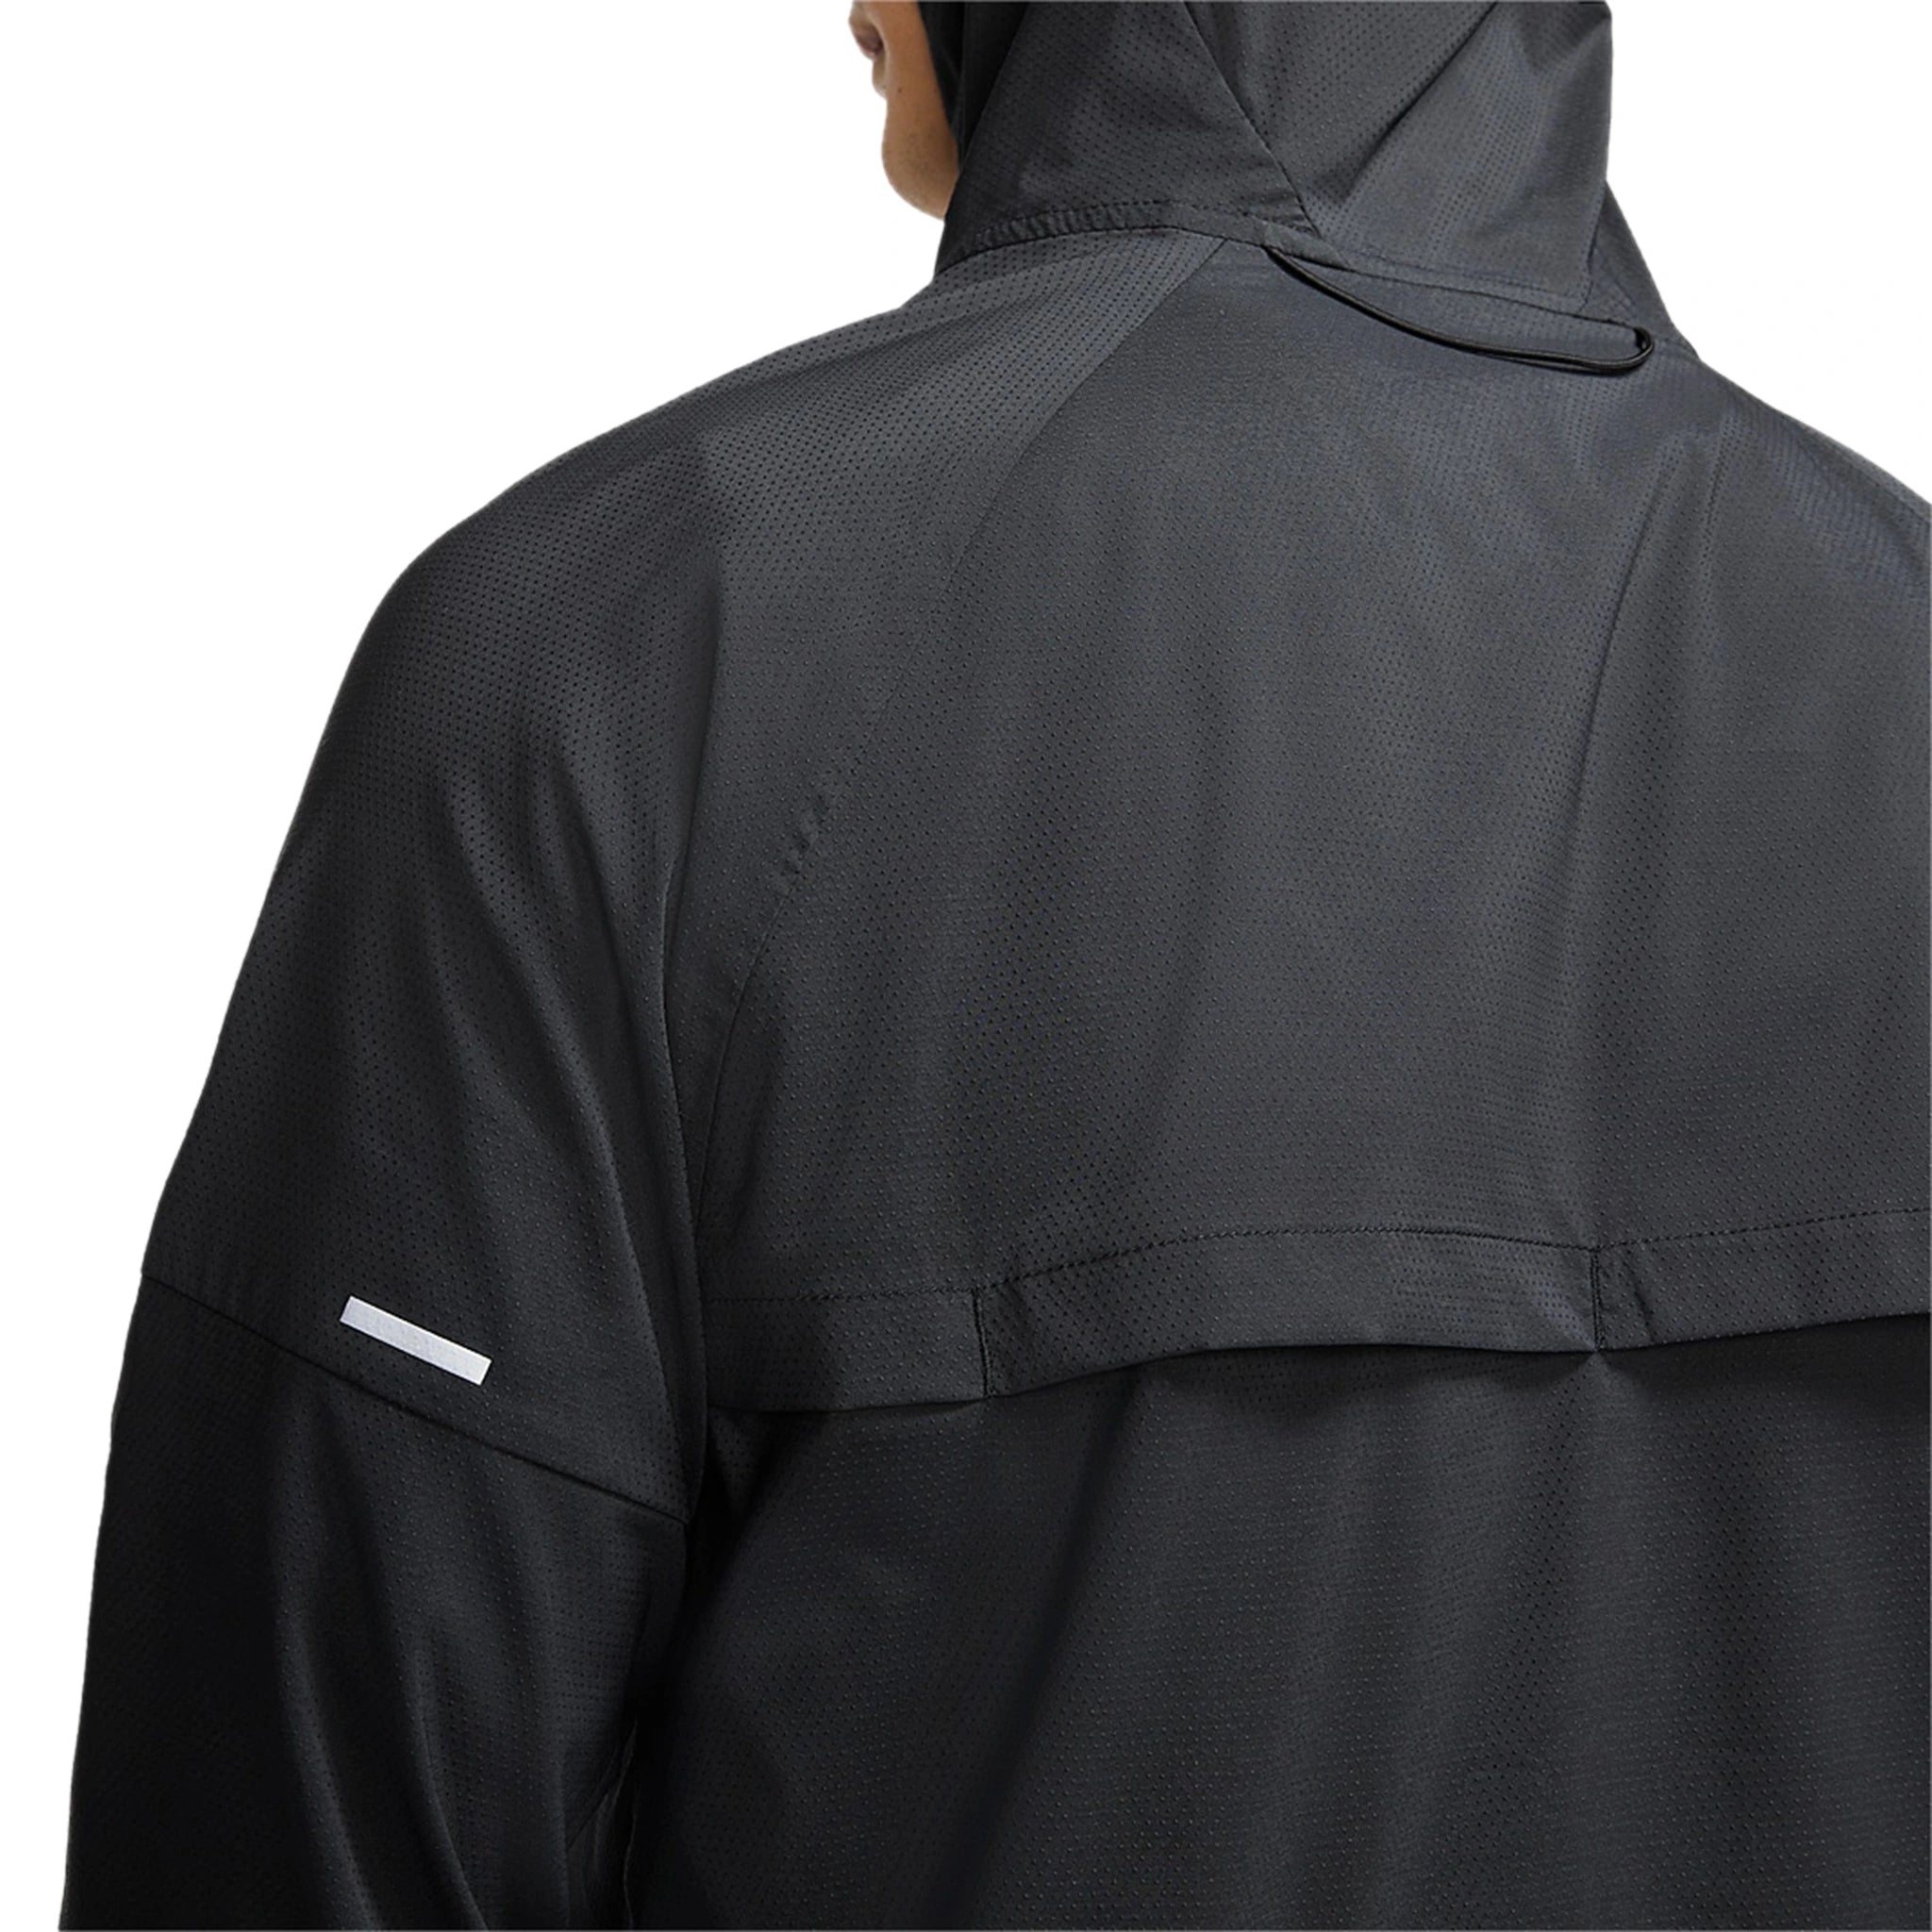 Model view of Nike Repel Packable Black Windrunner Jacket CZ9071-010